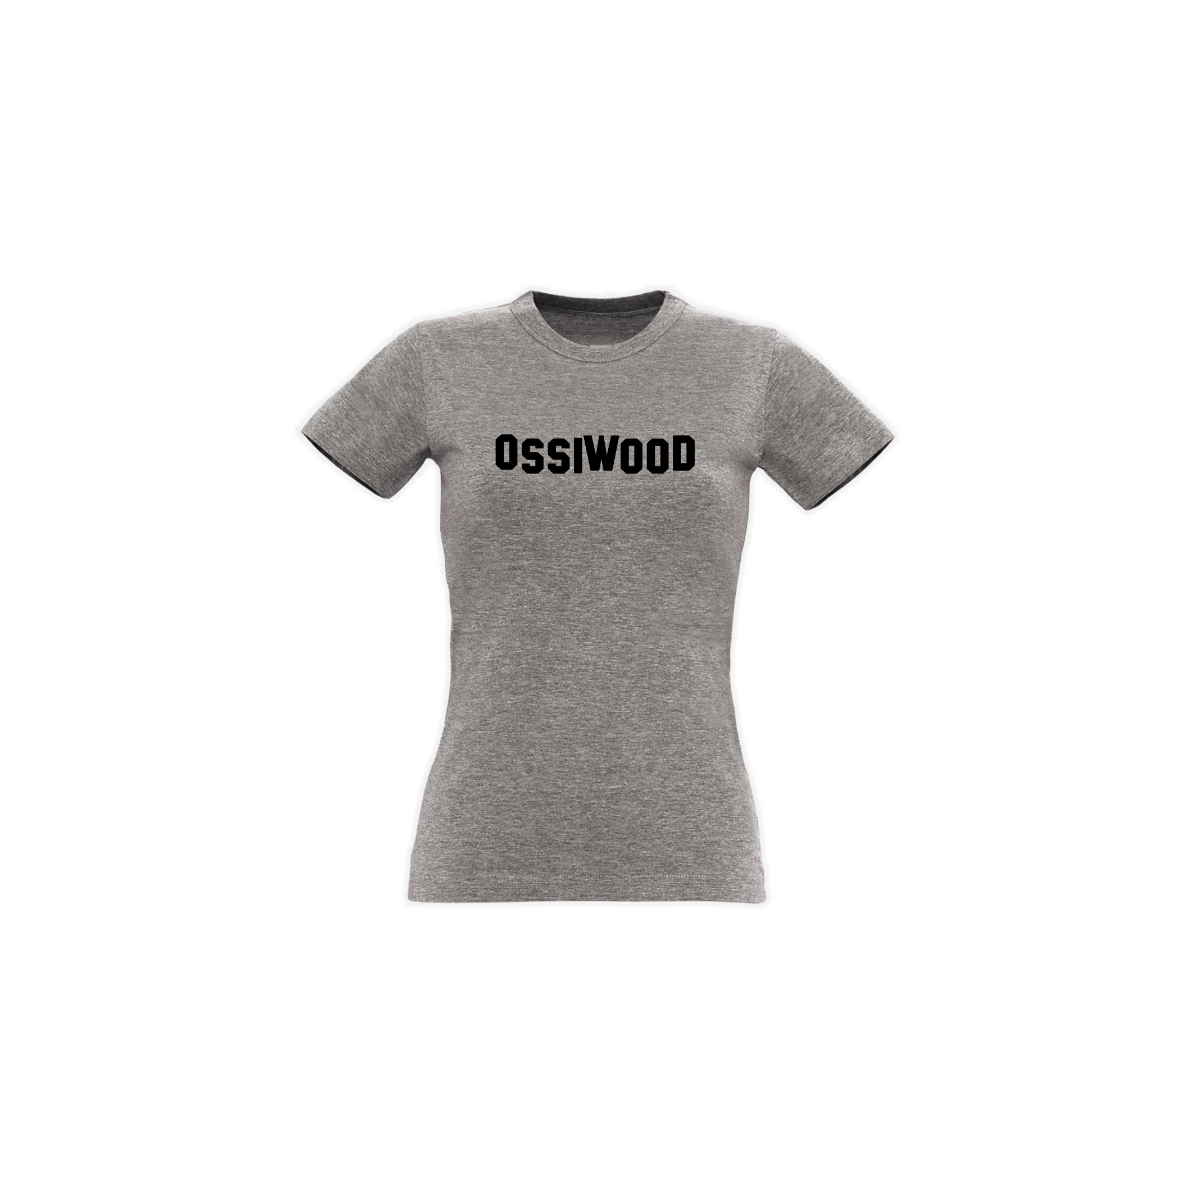 Girly-Shirt "OSSIWOOD" grau